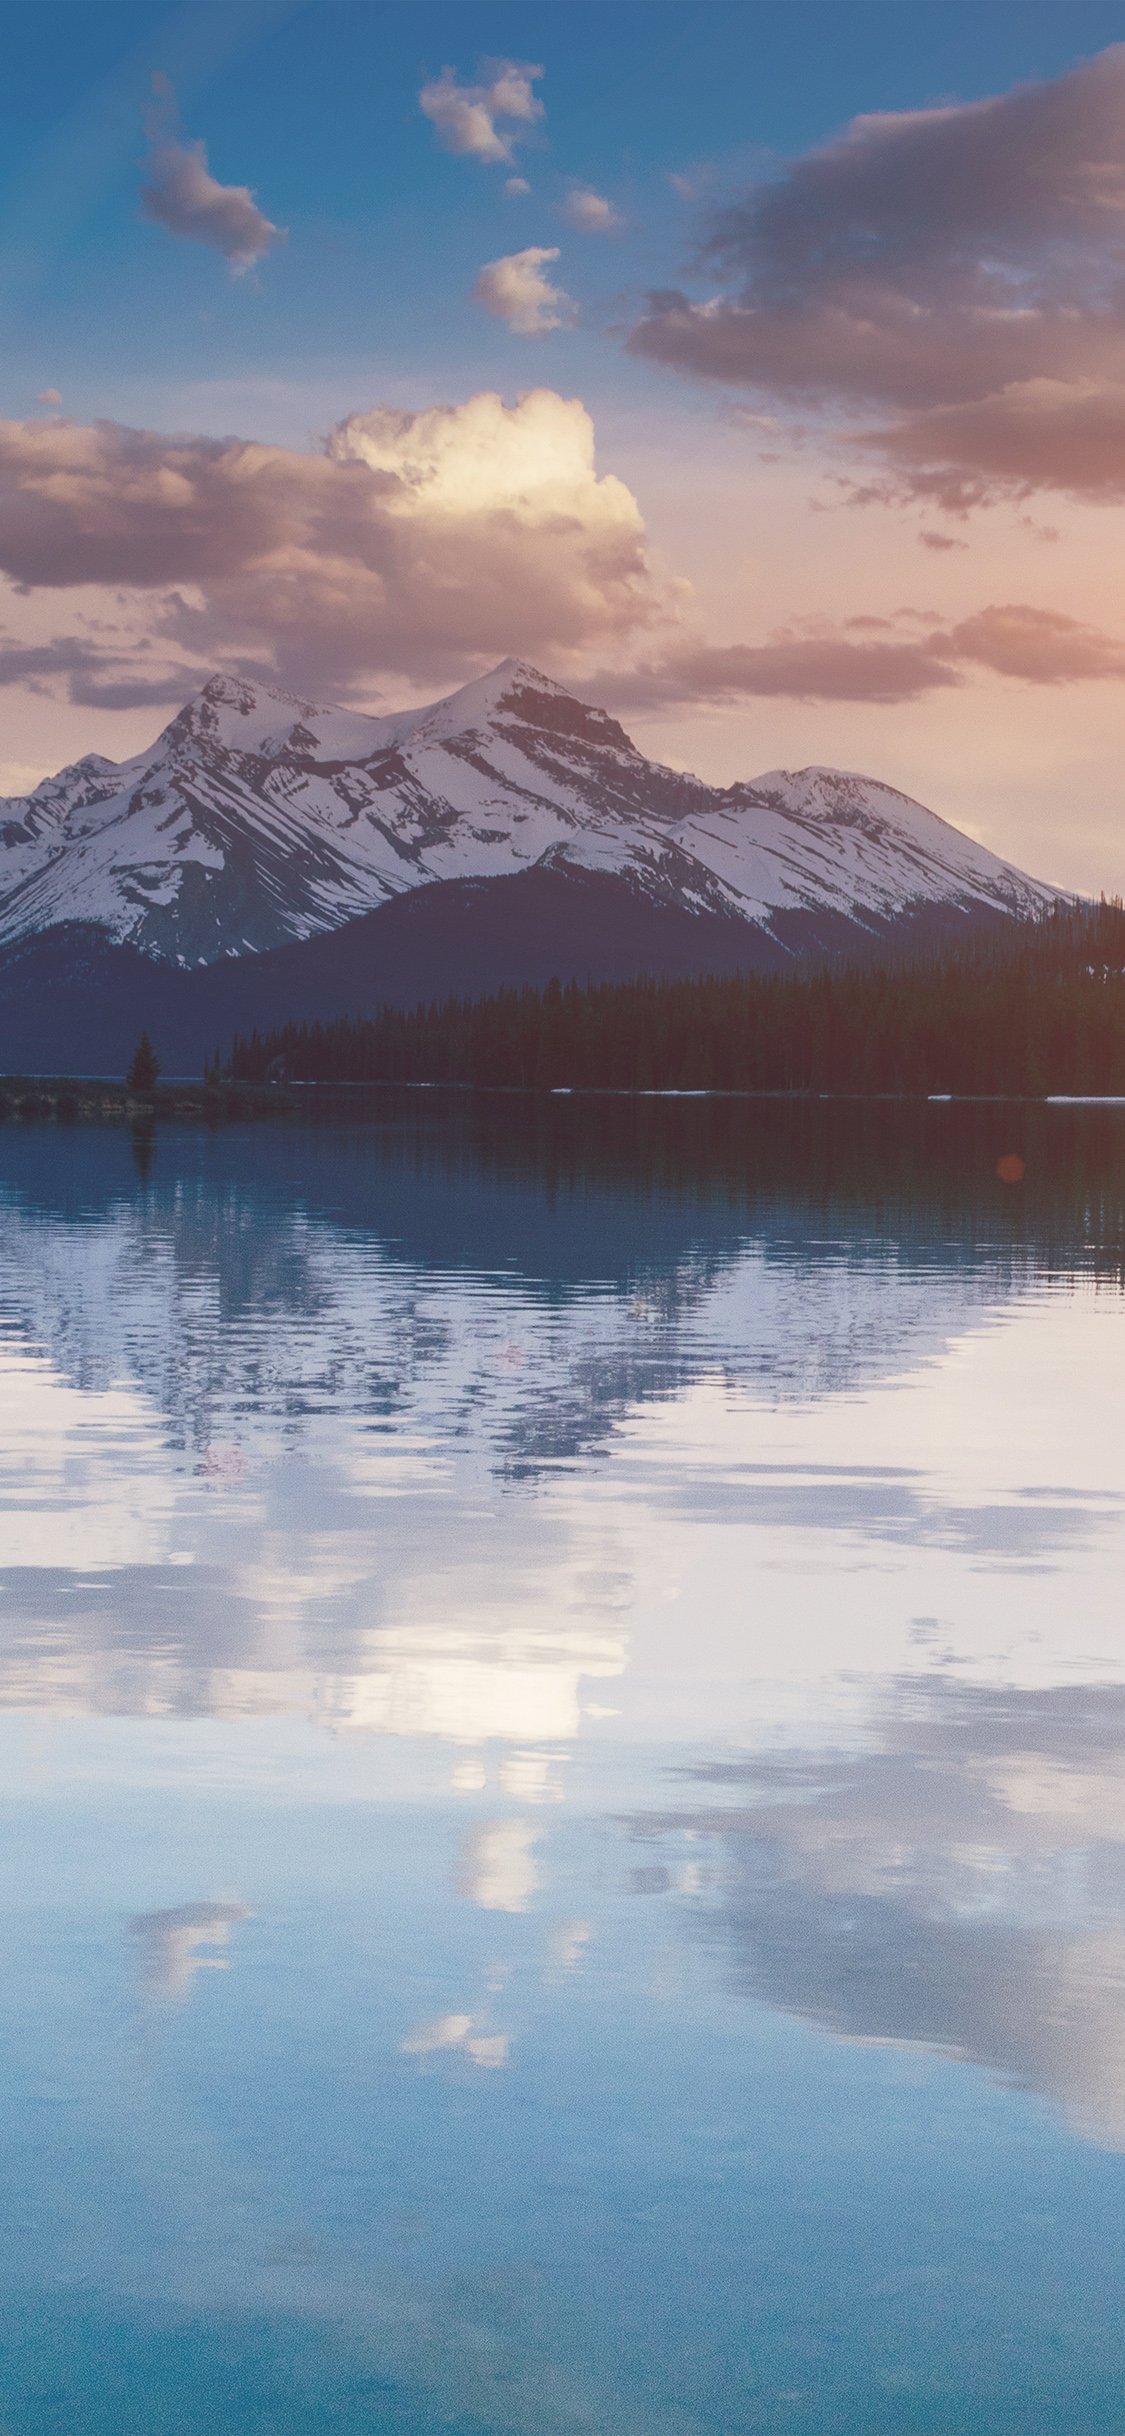 Lake peace mountain iPhone wallpaper 